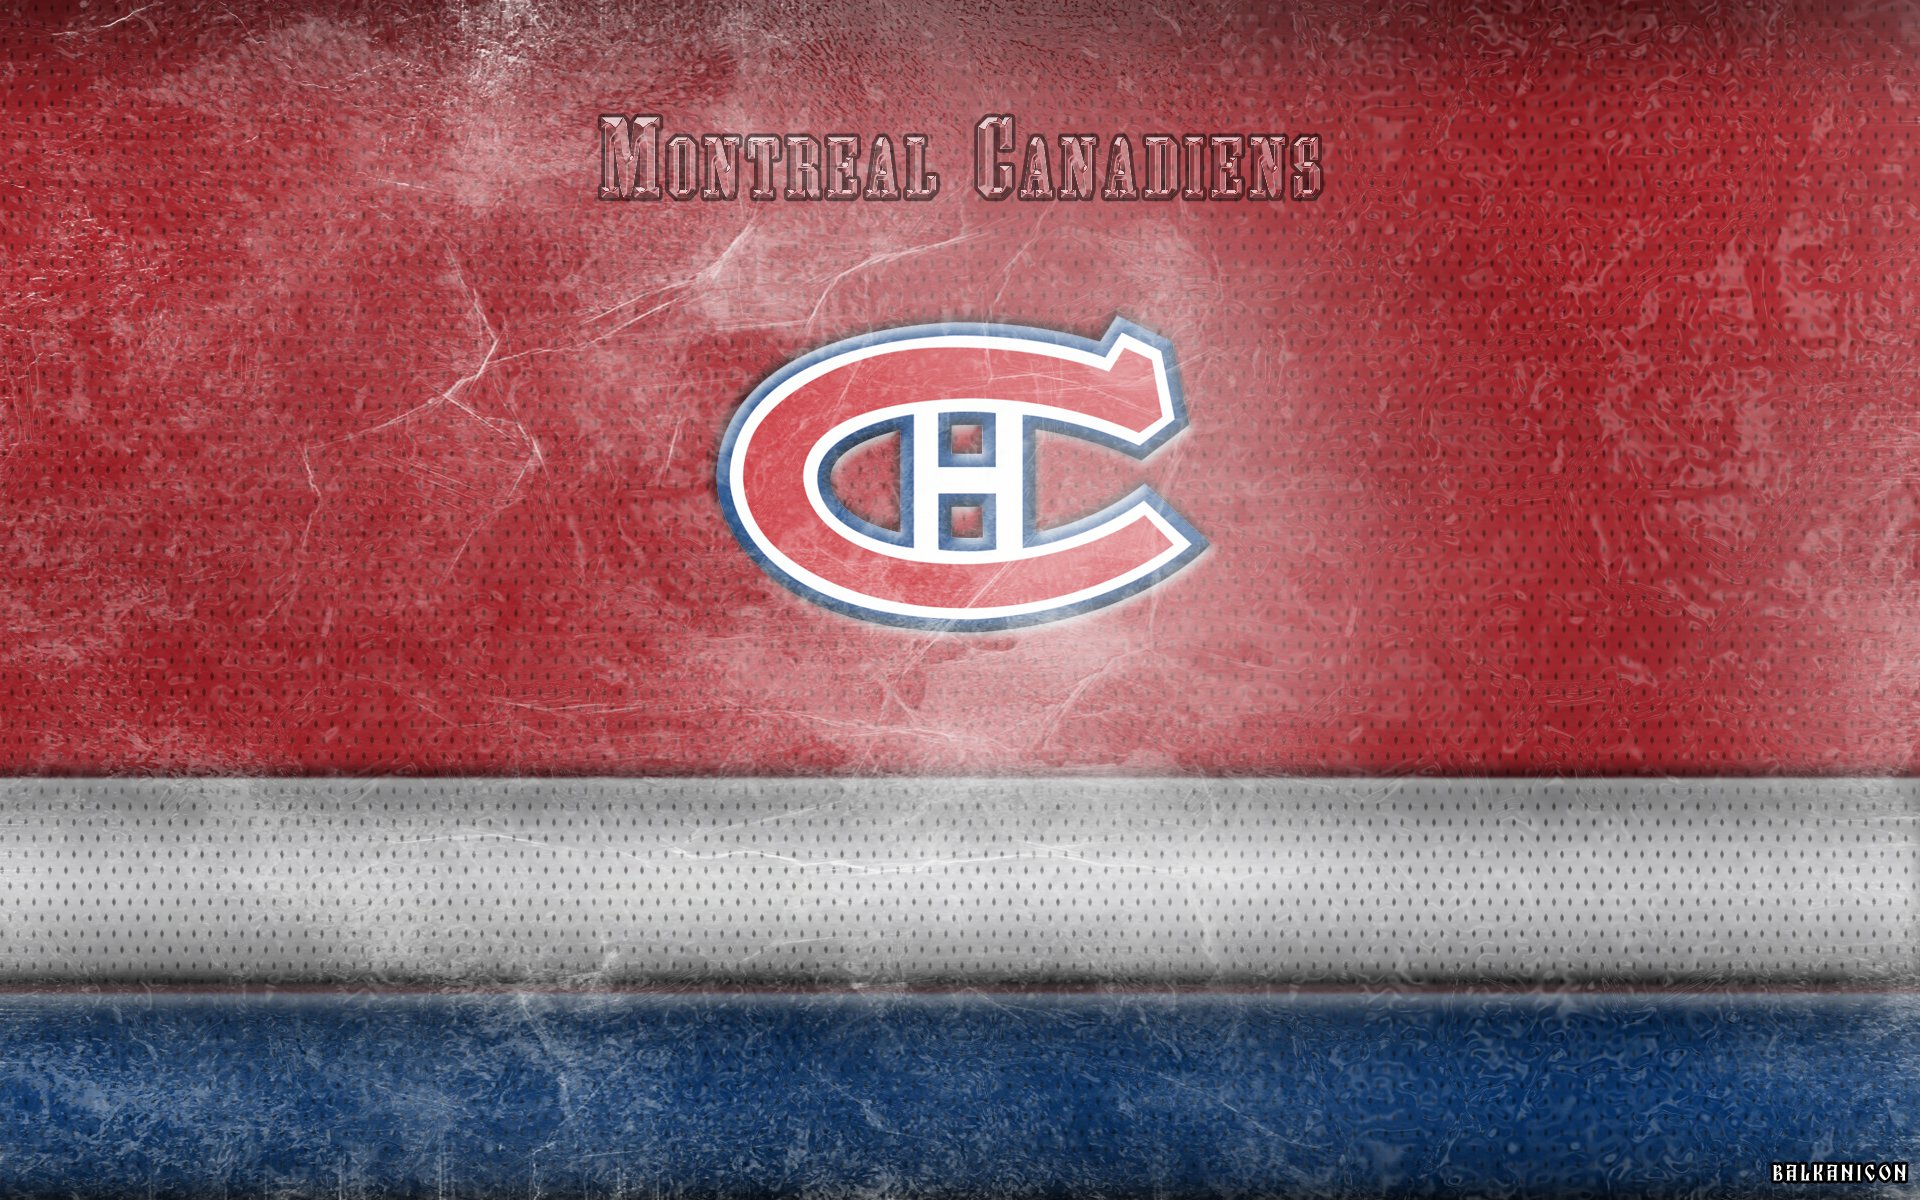 MONTREAL CANADIENS nhl hockey 1 wallpaper 1920x1200 344933 1920x1200